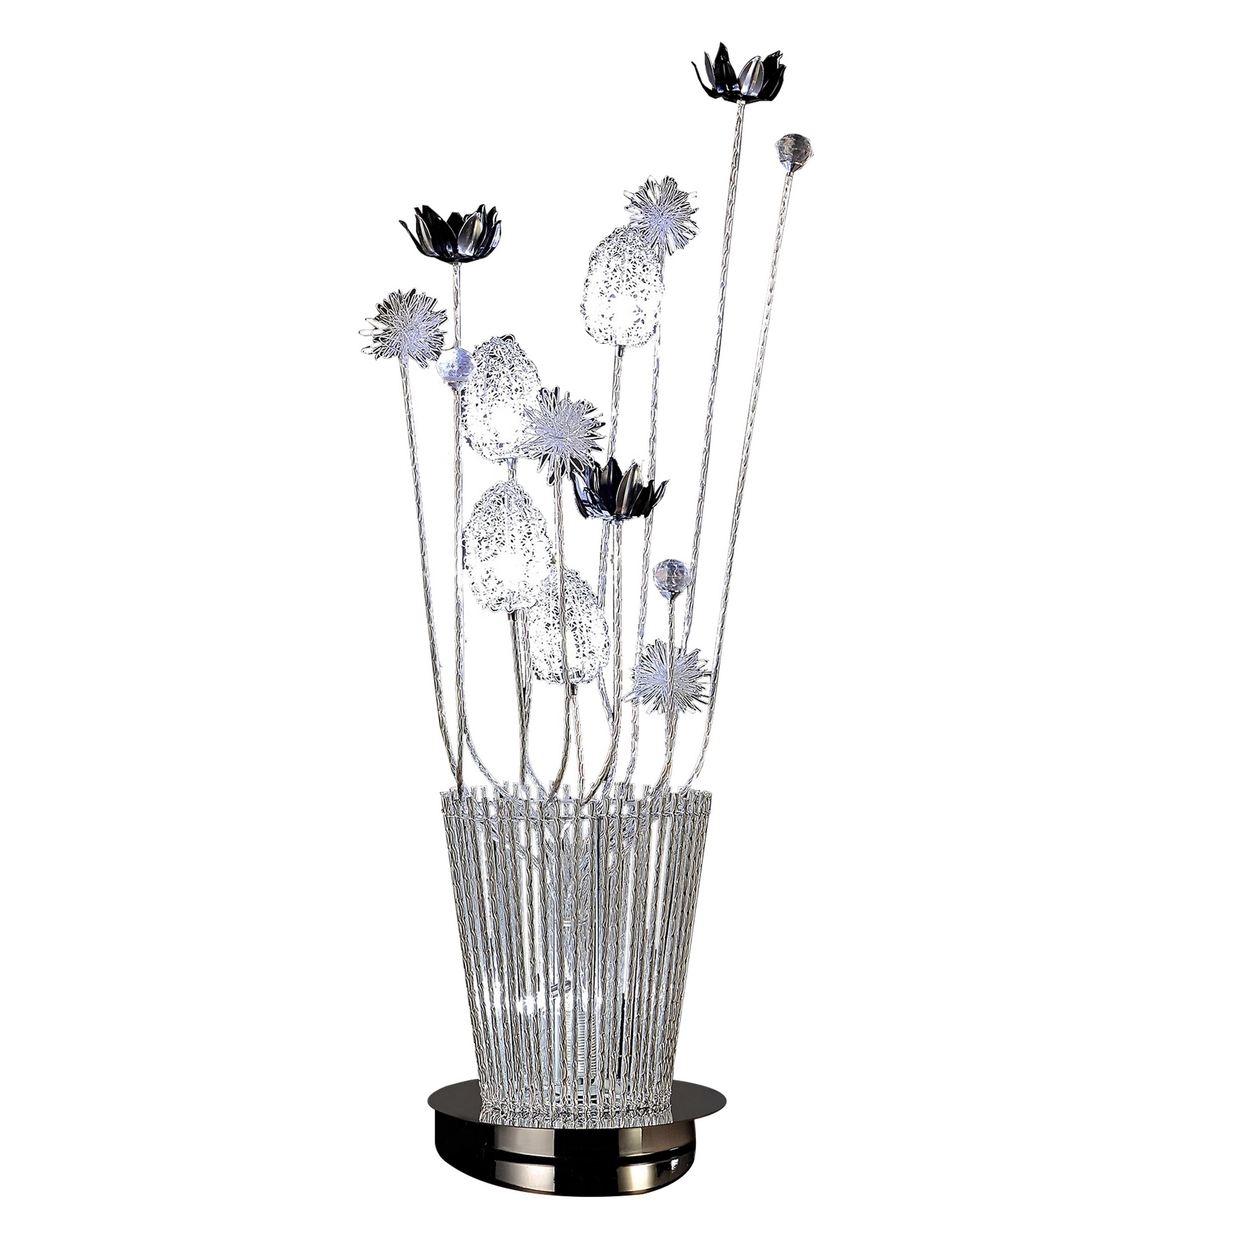 26 Inch Accent Table Lamp, Flower Vase Design, Metal, Chrome Finish -Saltoro Sherpi